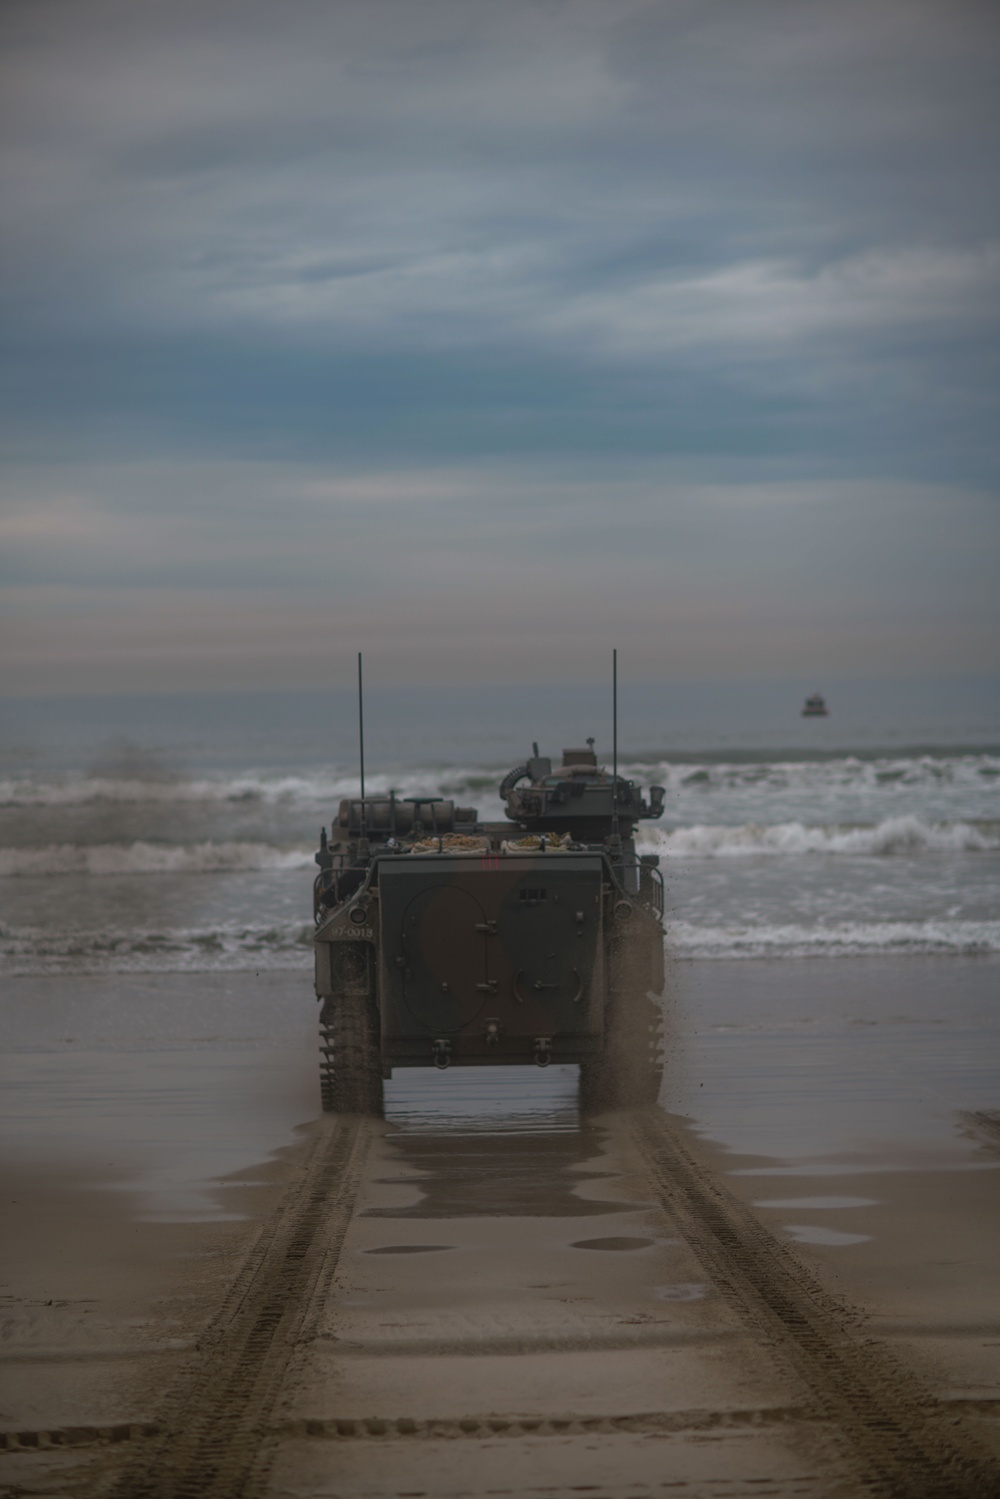 Iron Fist 2022: 3rd Assault Amphibian Battalion Marines, JGSDF soldiers conduct beach waterborne operations